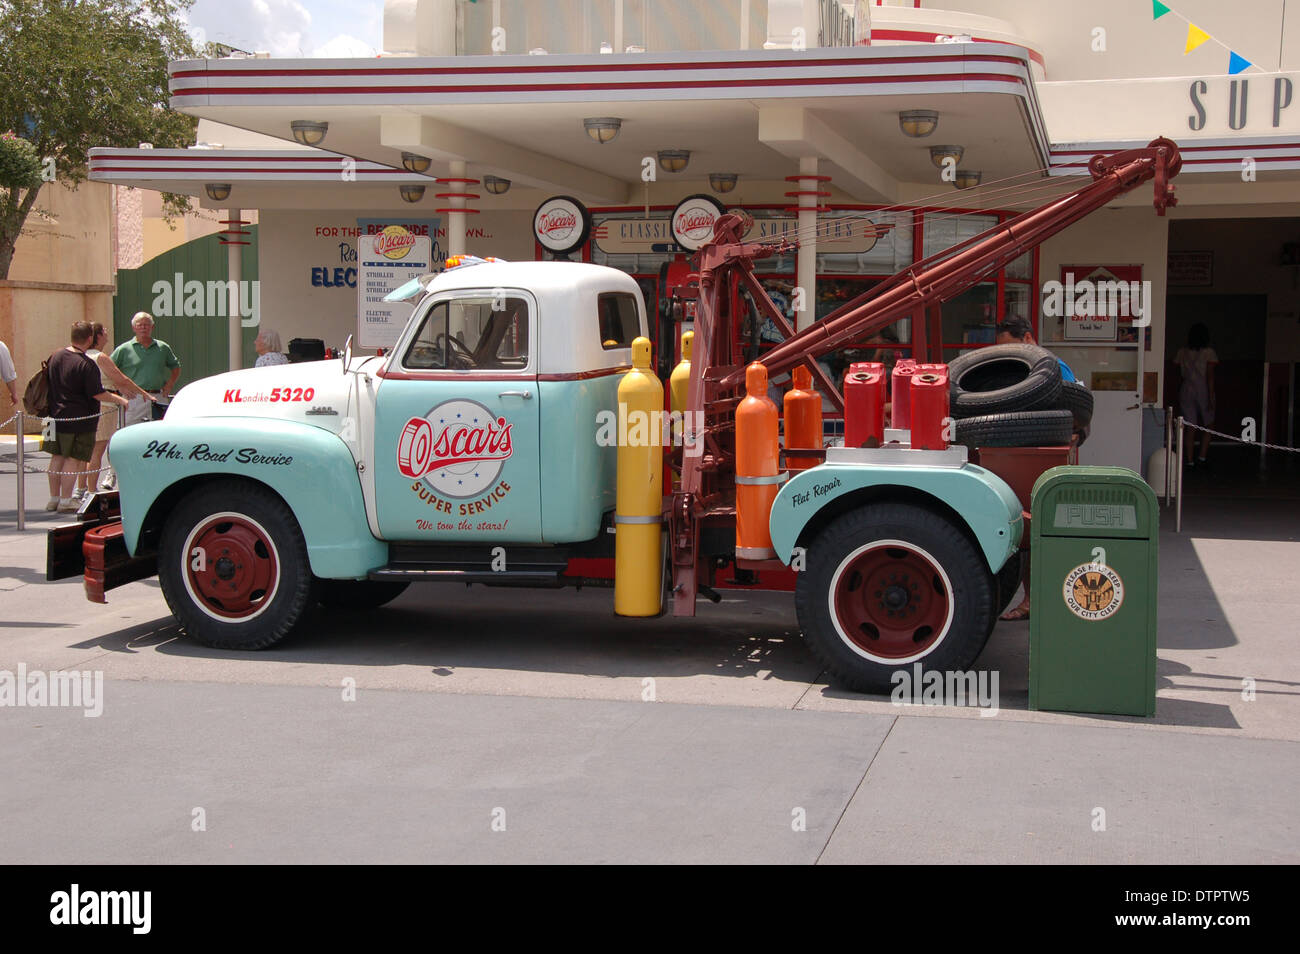 A rescue truck on display at Walt Disney's Hollywood Studios, Orlando, Florida, U.S.A Stock Photo